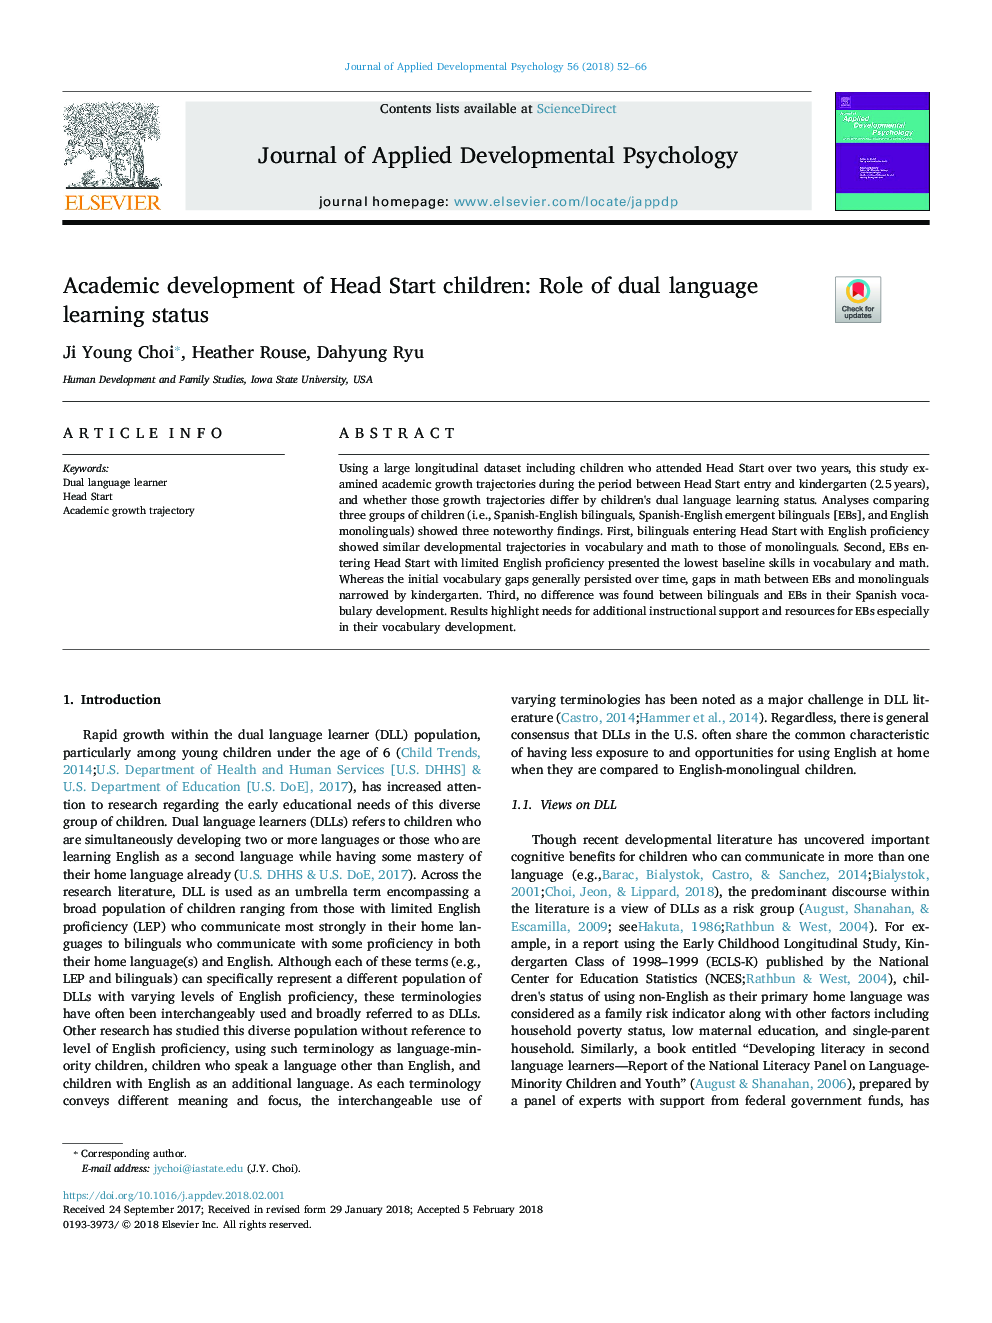 Academic development of Head Start children: Role of dual language learning status